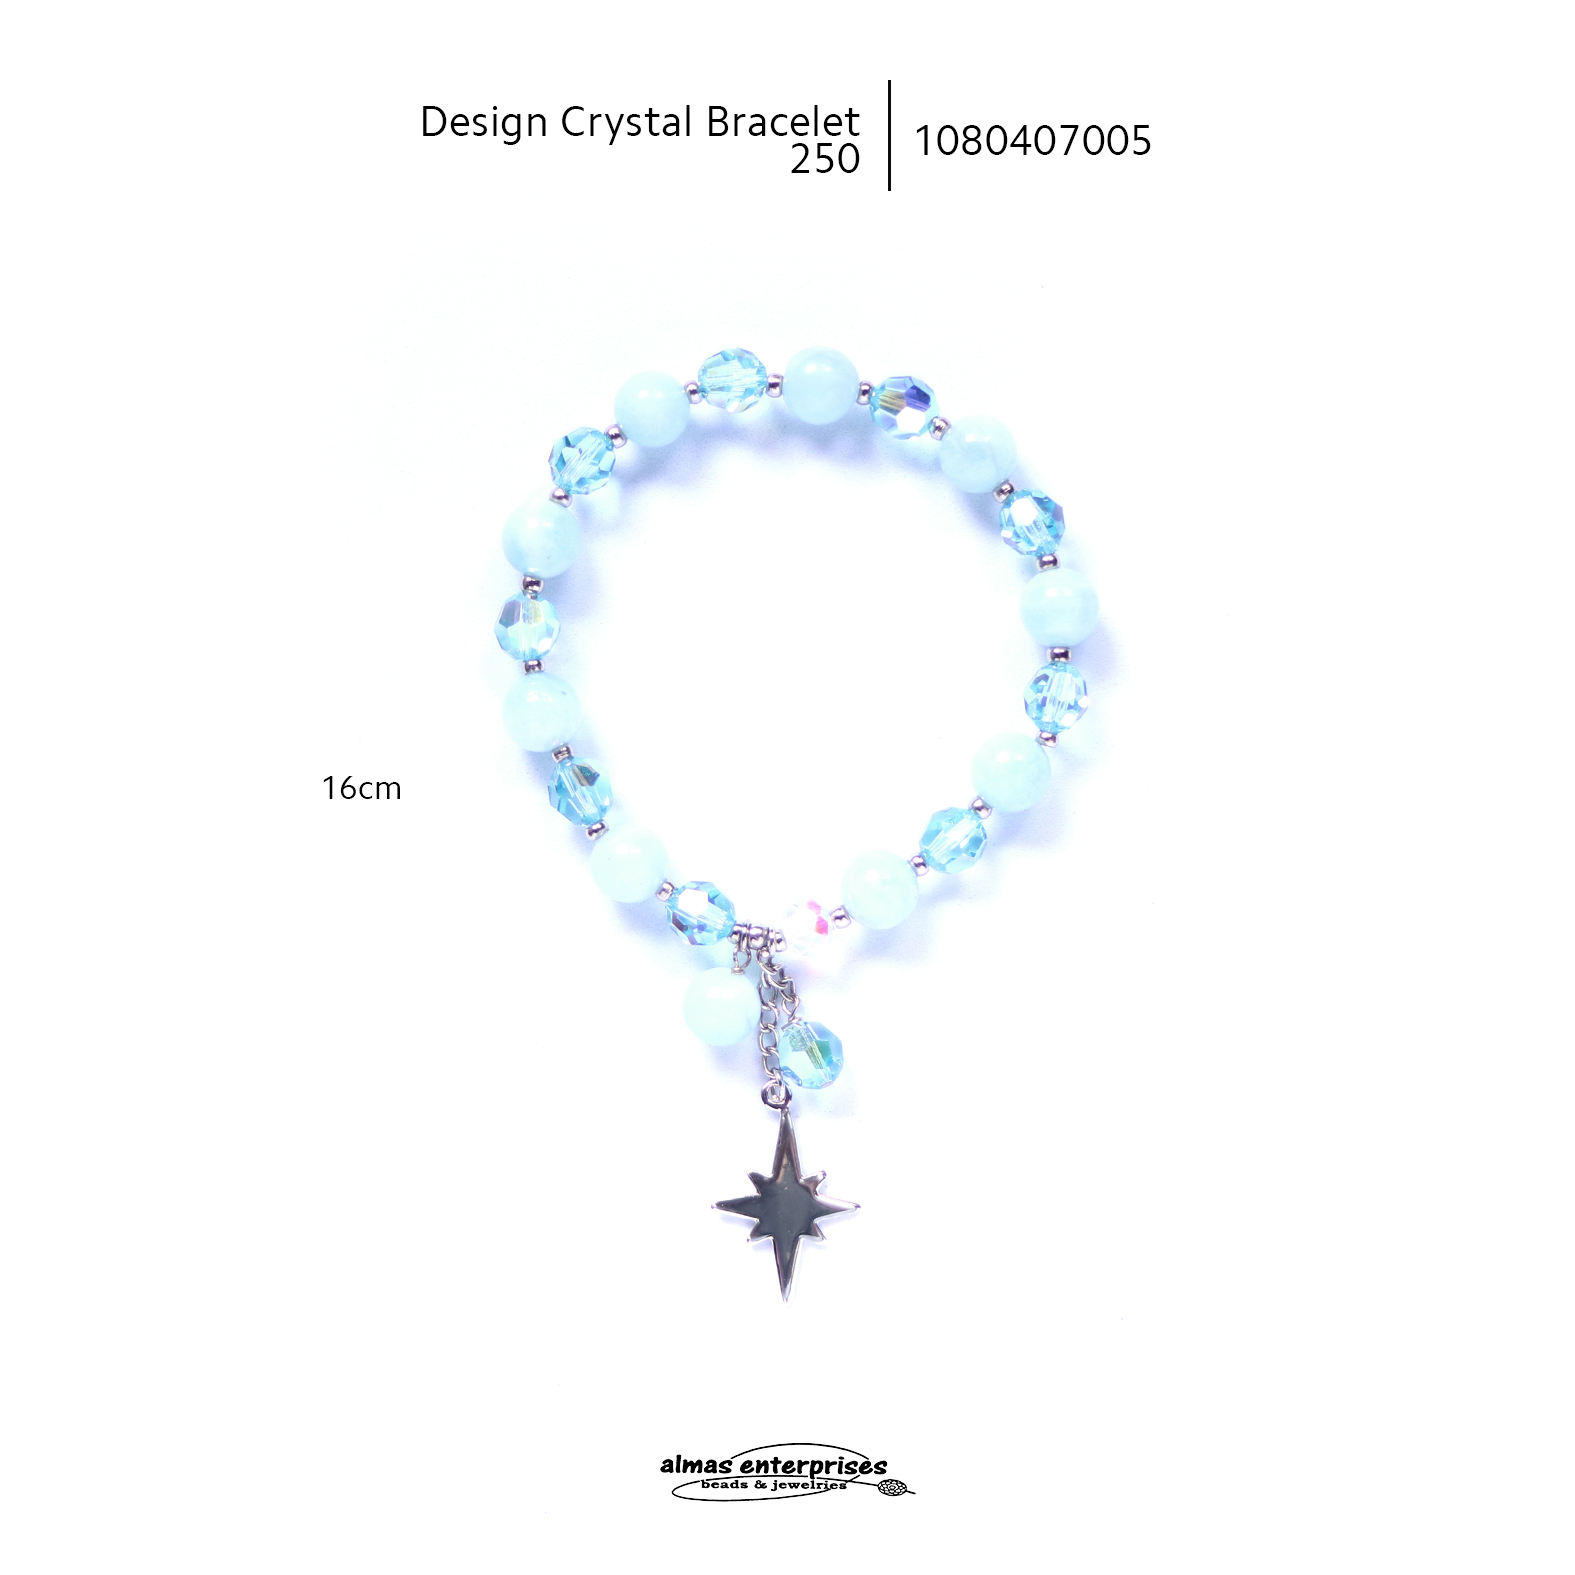 Design Cry Bracelet 250